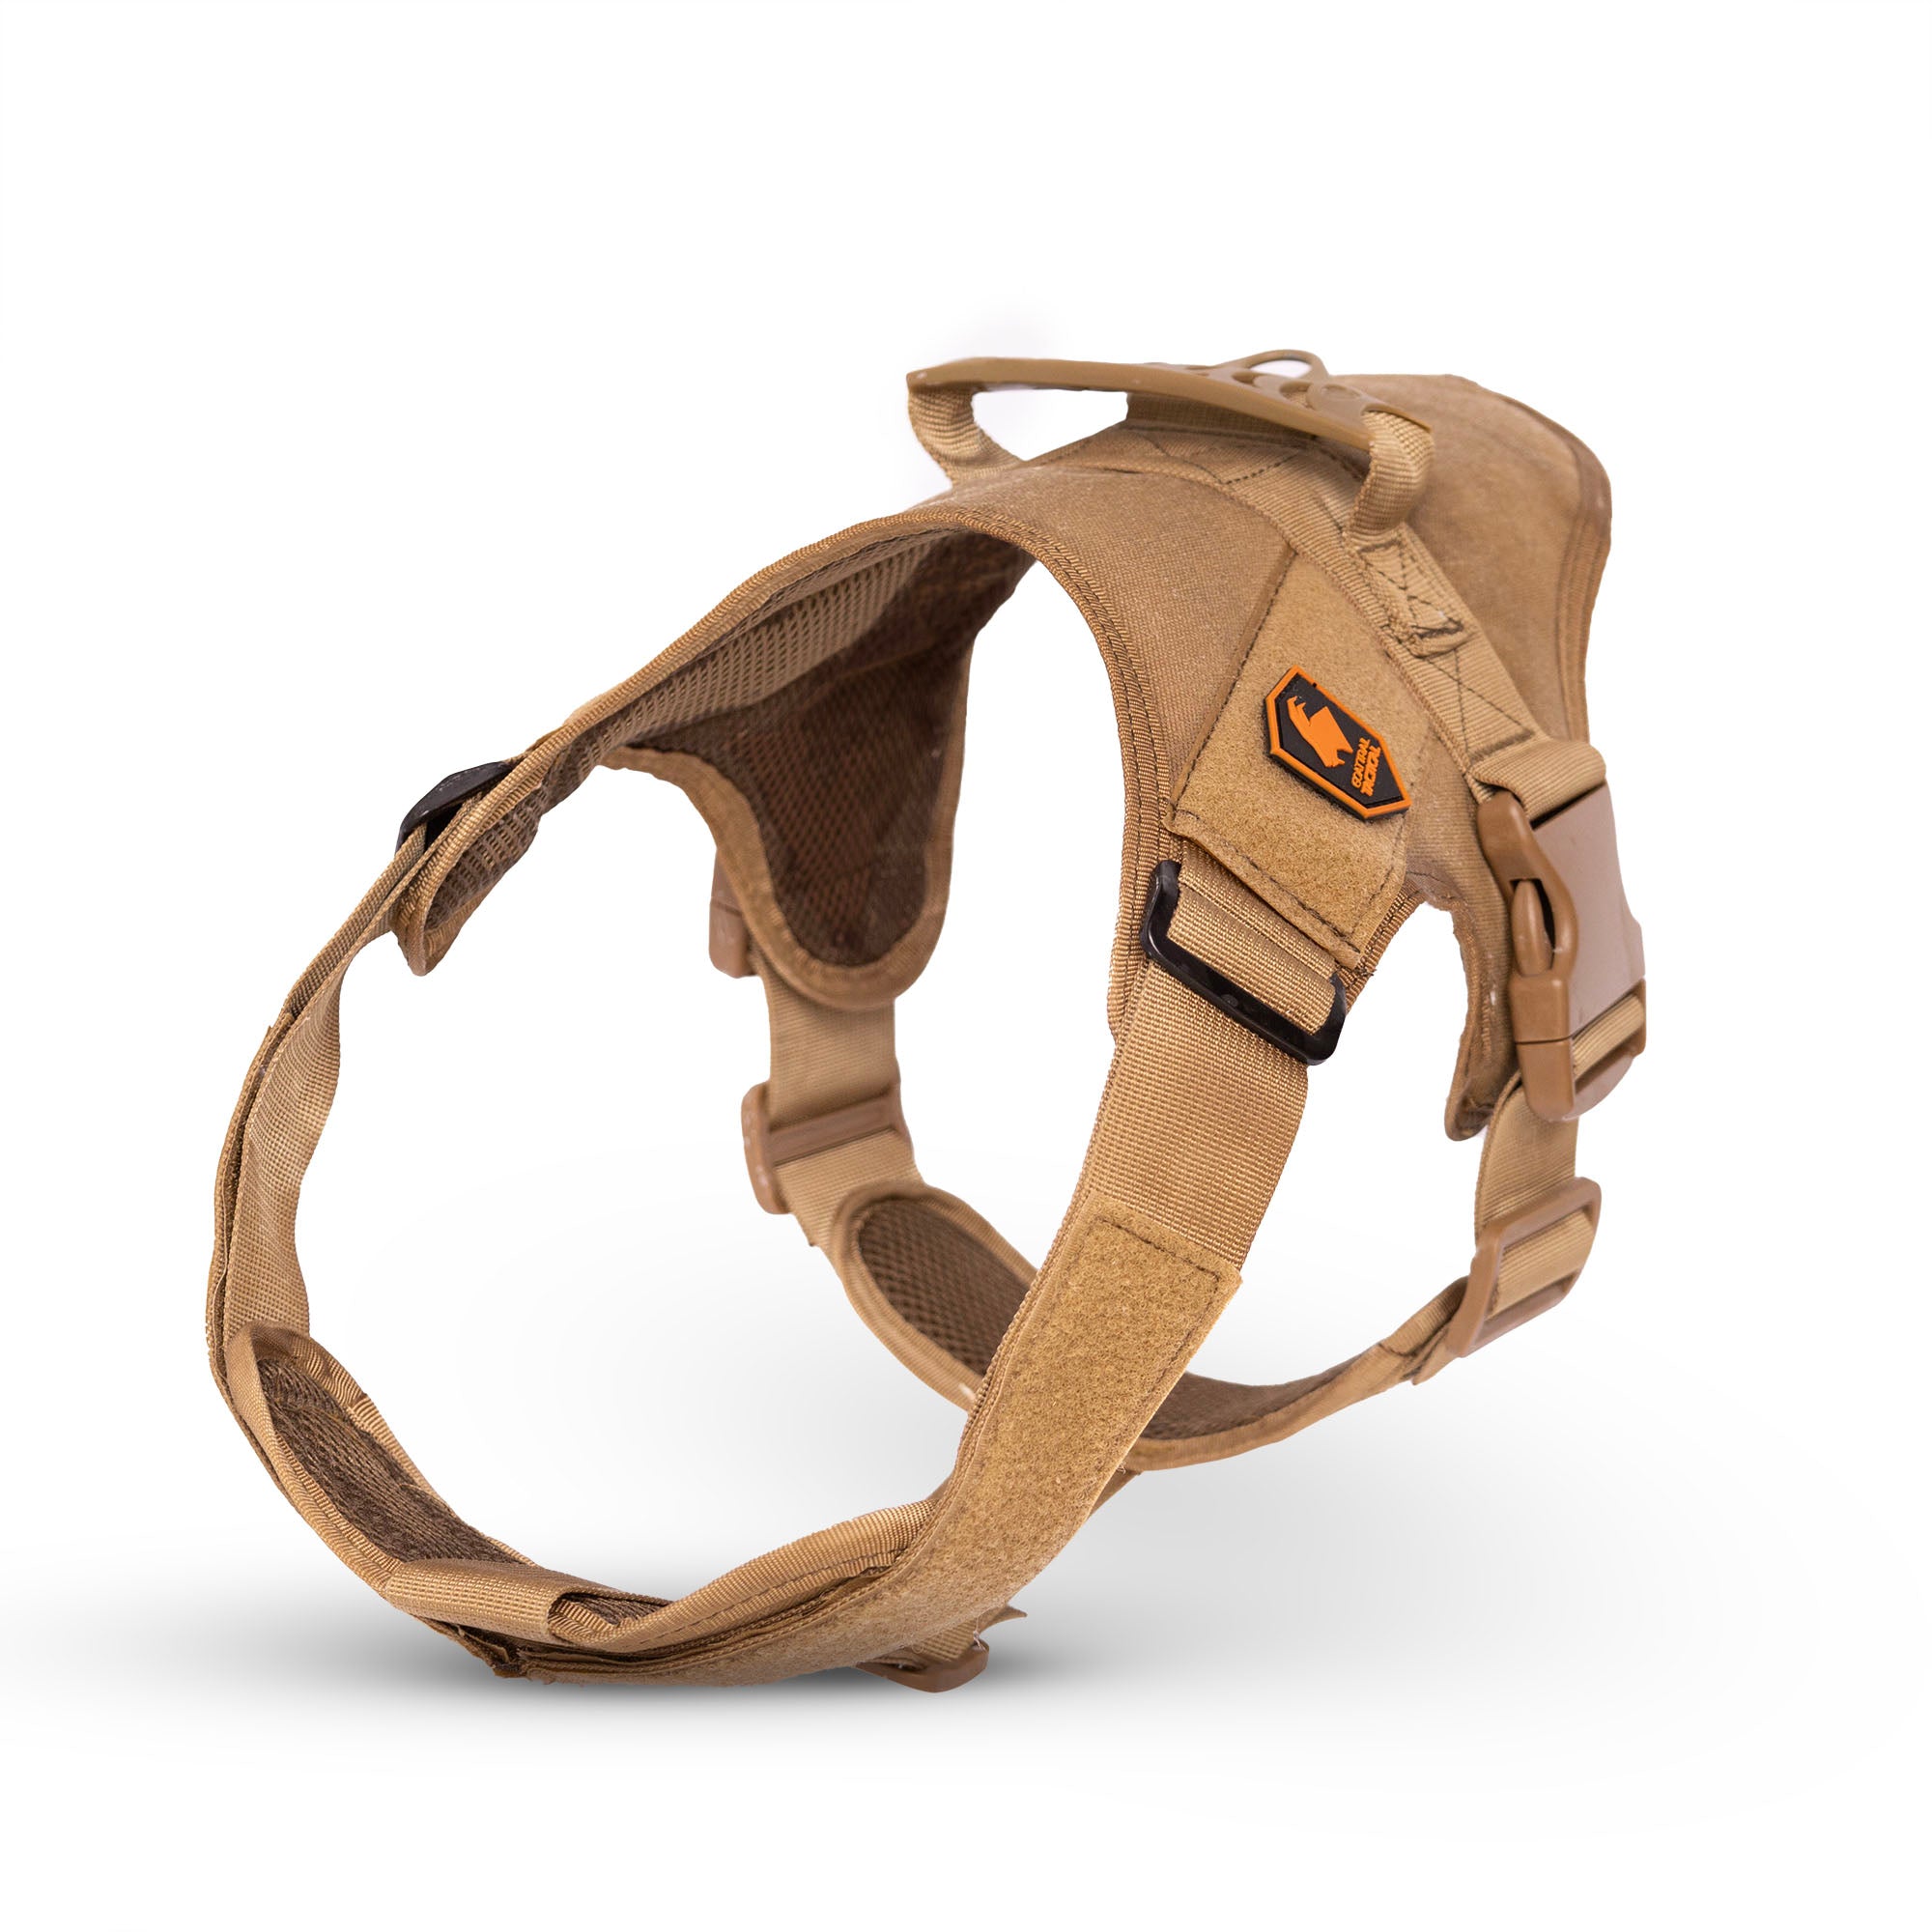 SSGLex™ Back-Clip Tactical Dog Harness